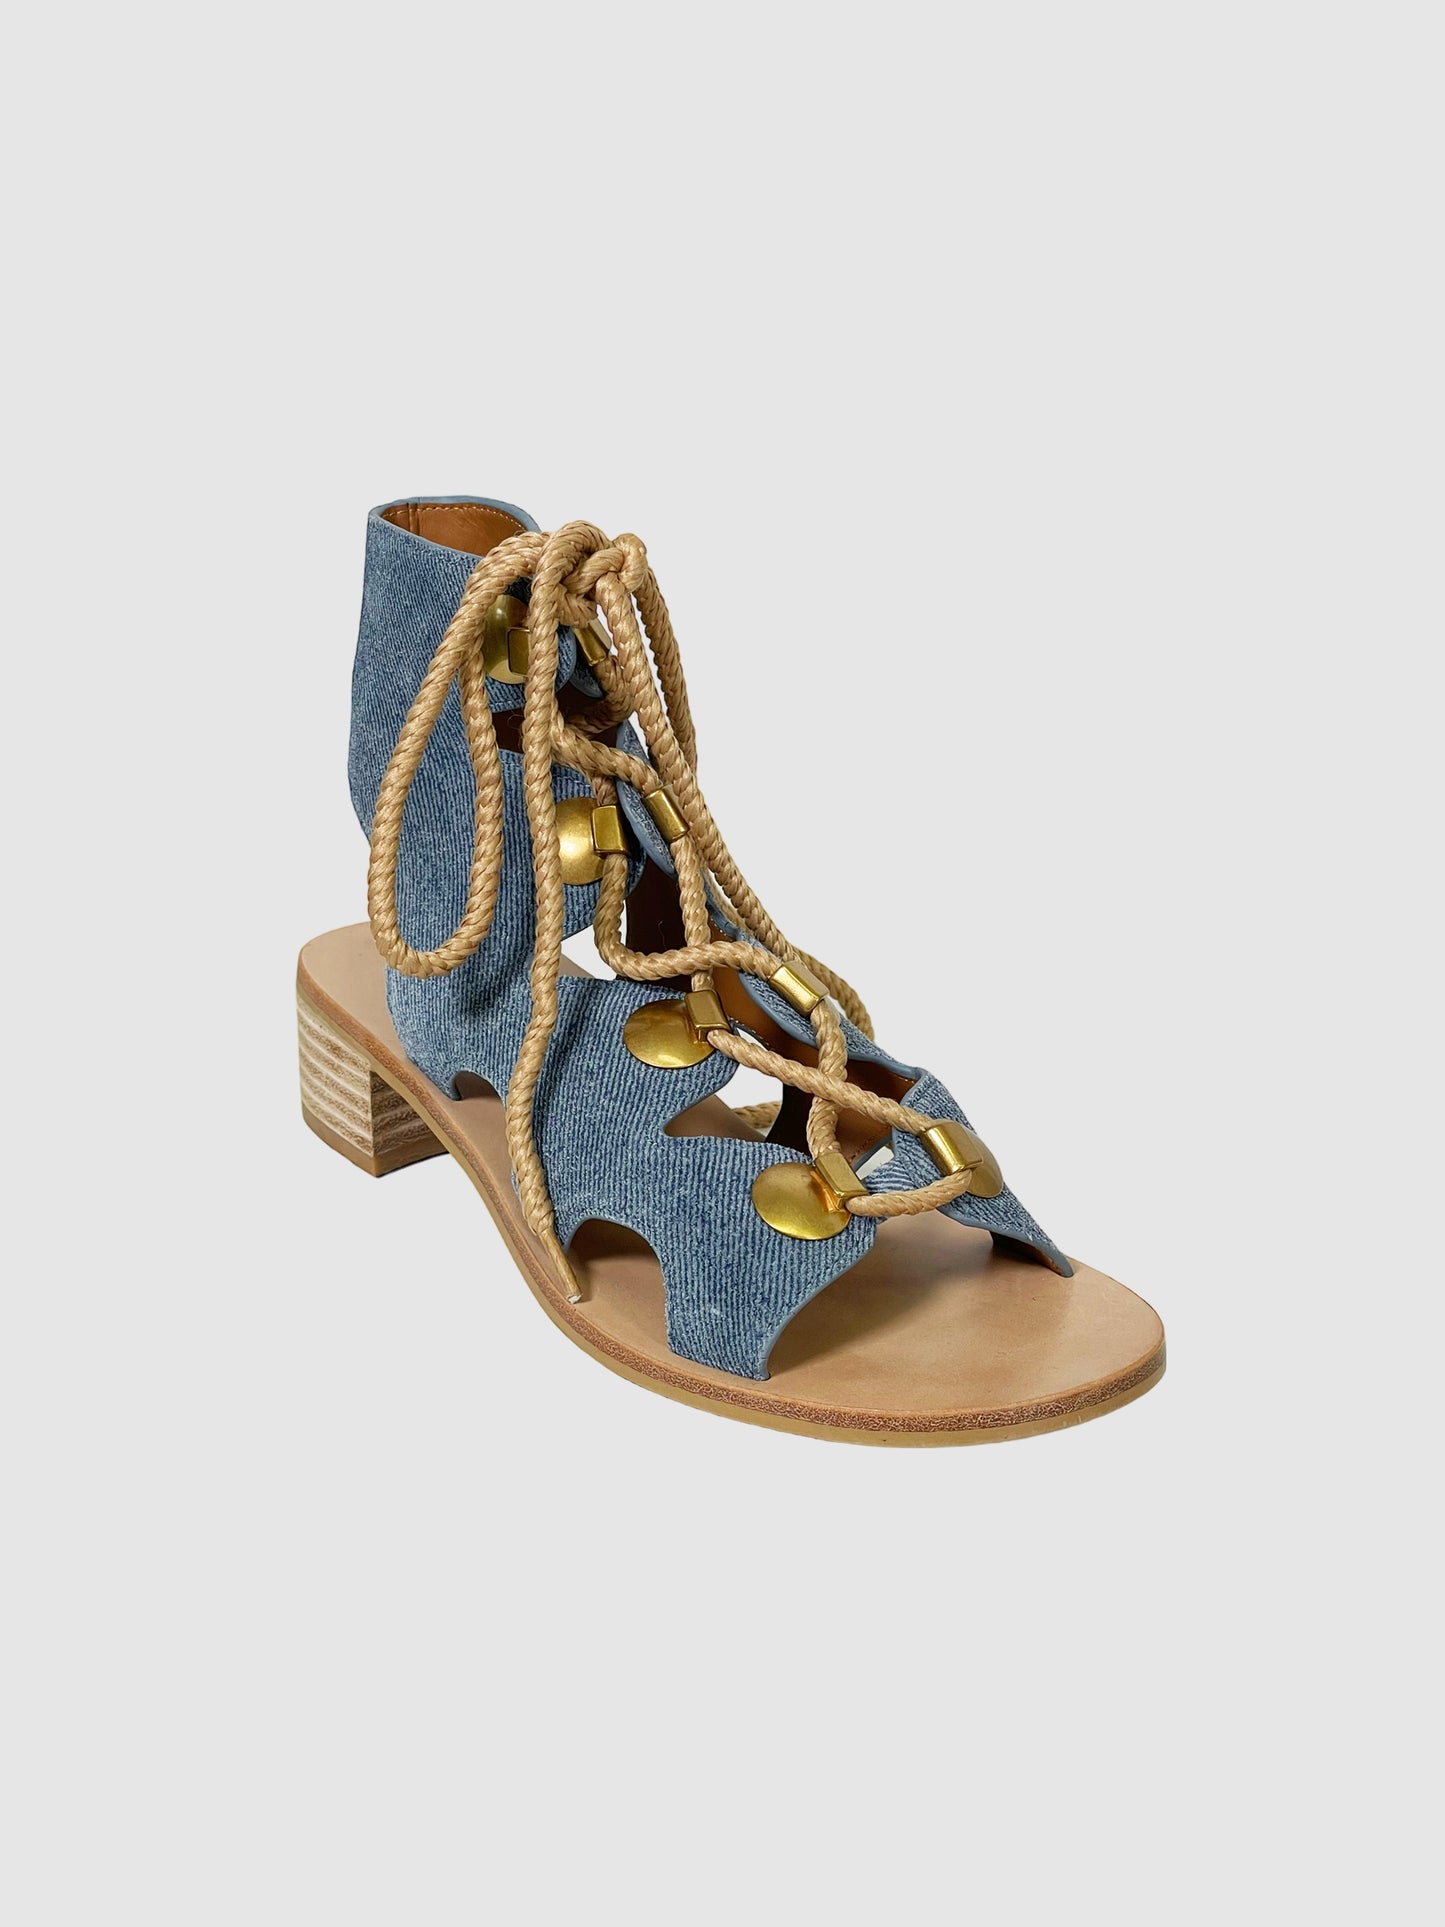 See by Chloe Denim Gladiator Sandals - Size 37